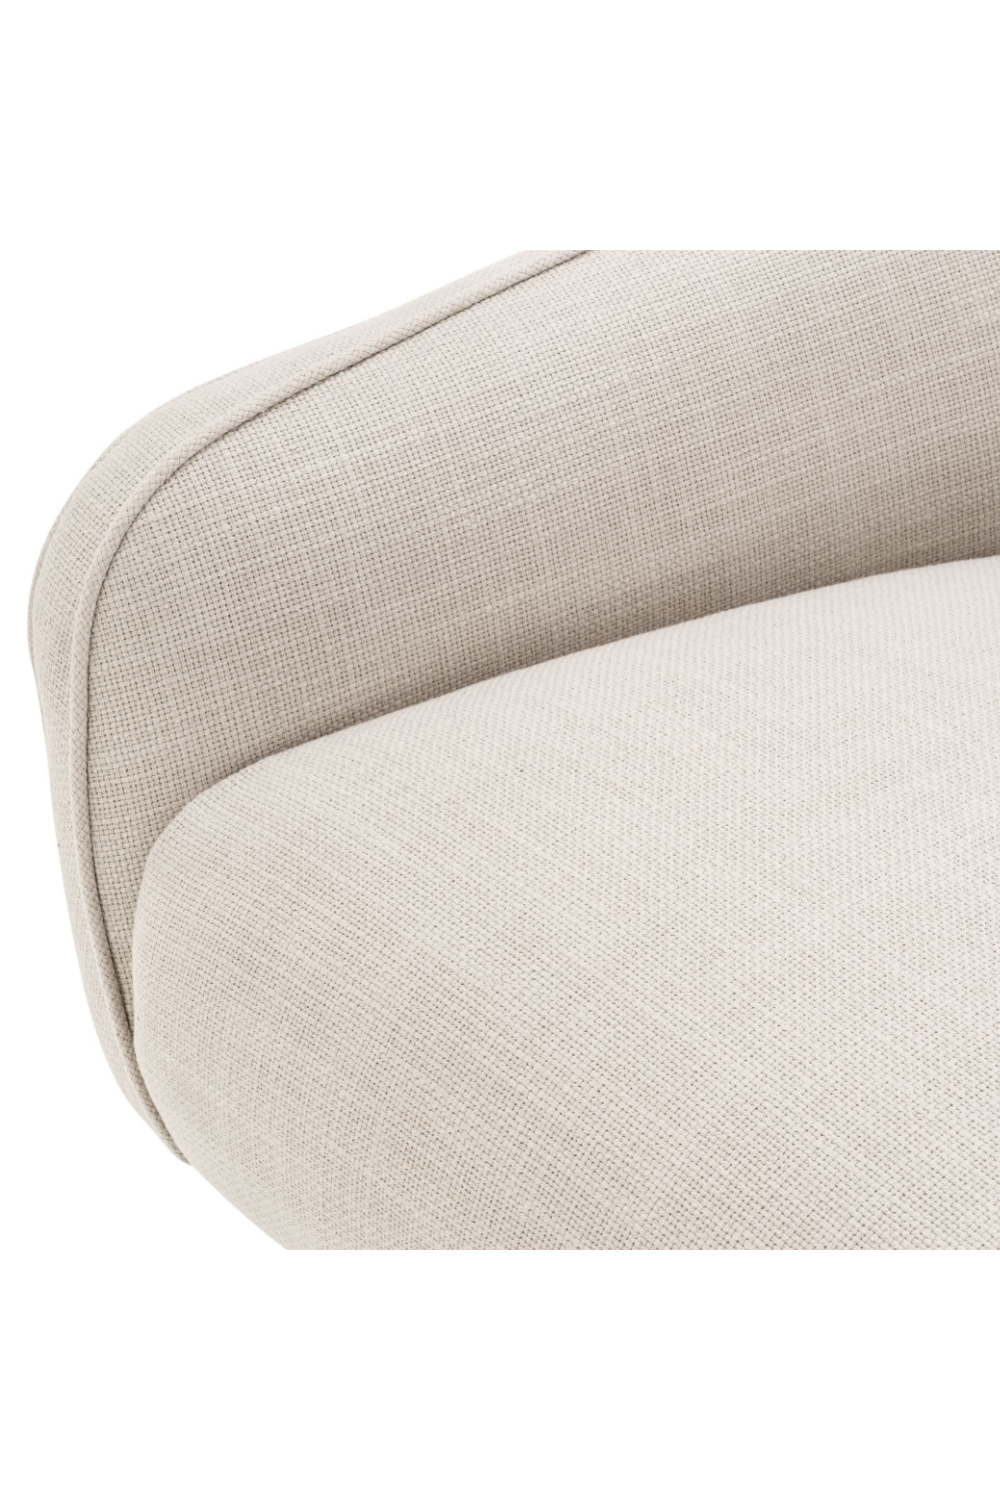 Beige Upholstered Swivel Chair | Eichholtz Serena | Oroa.com